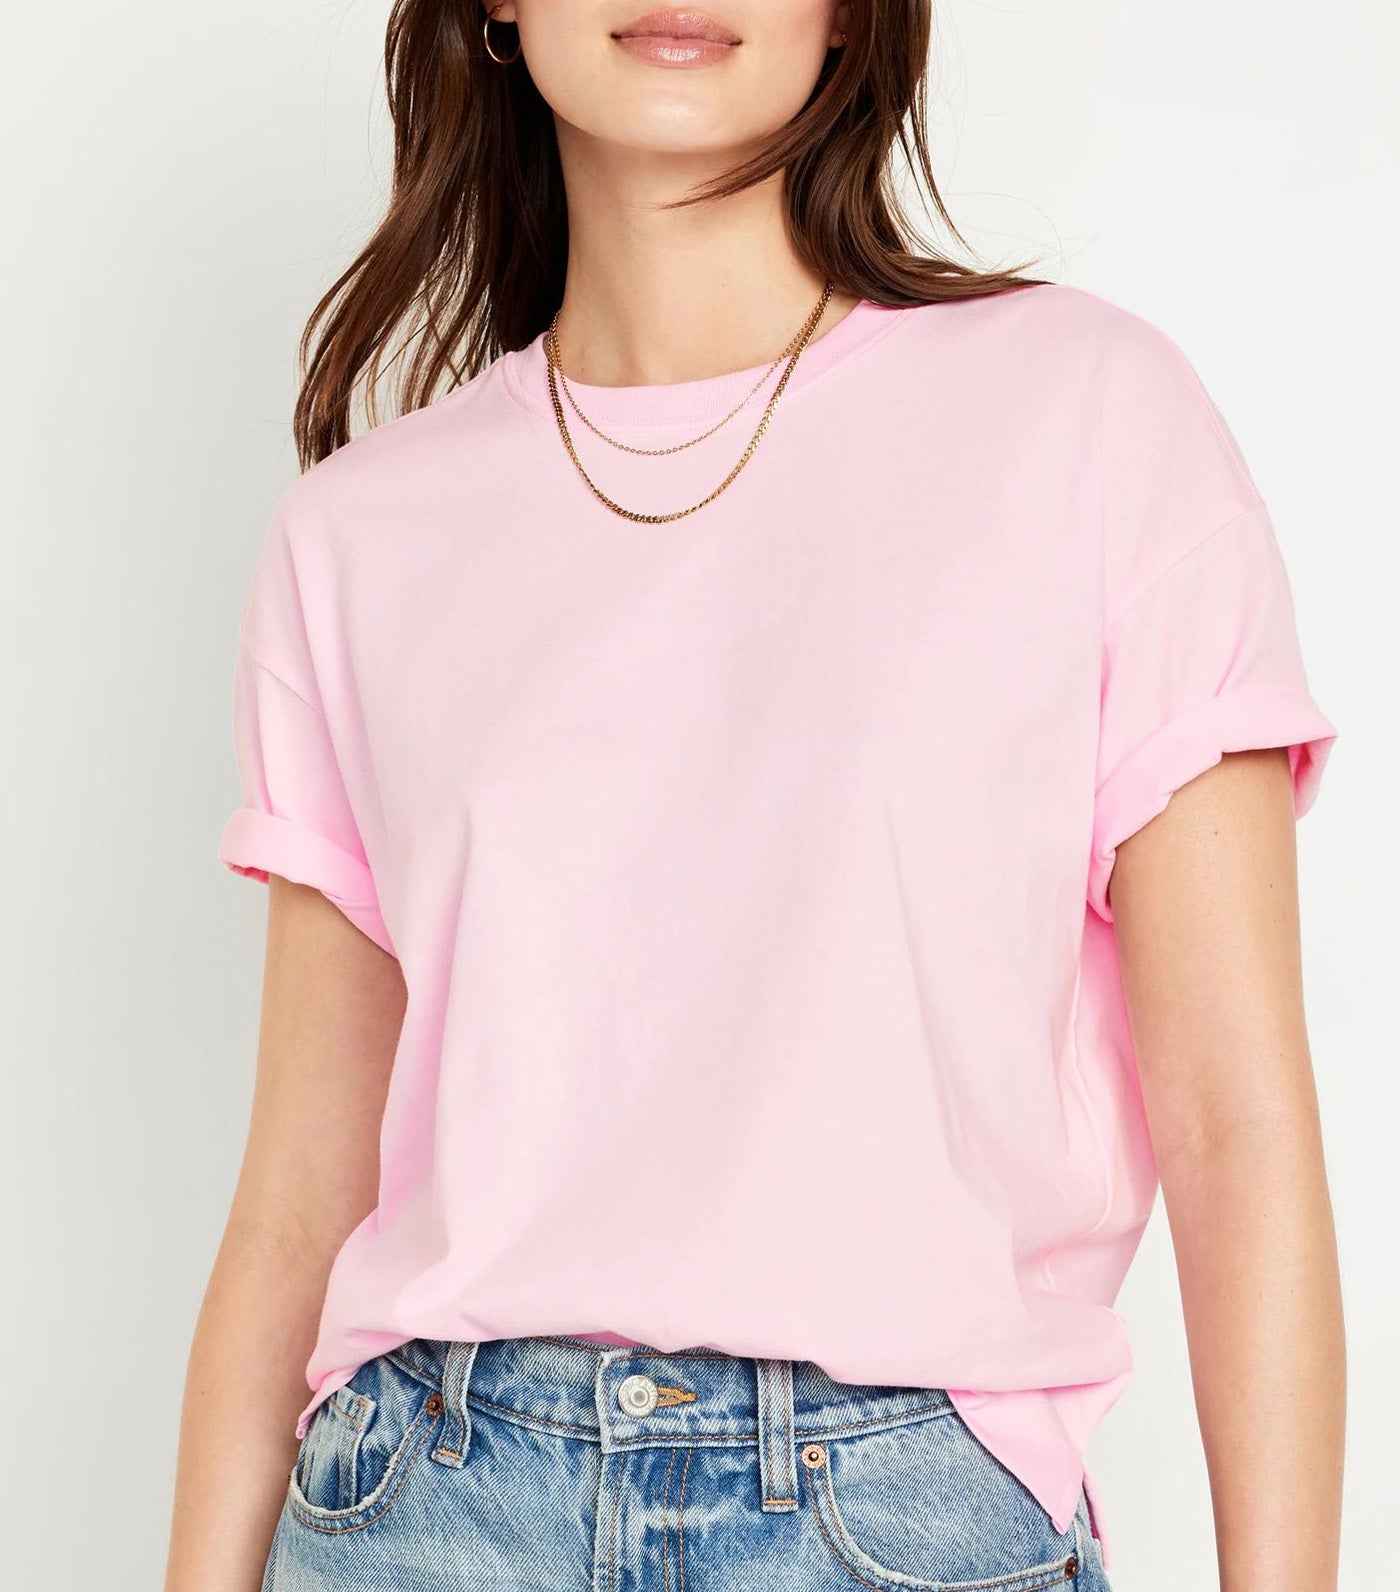 Vintage T-Shirt For Women Preppy Pink